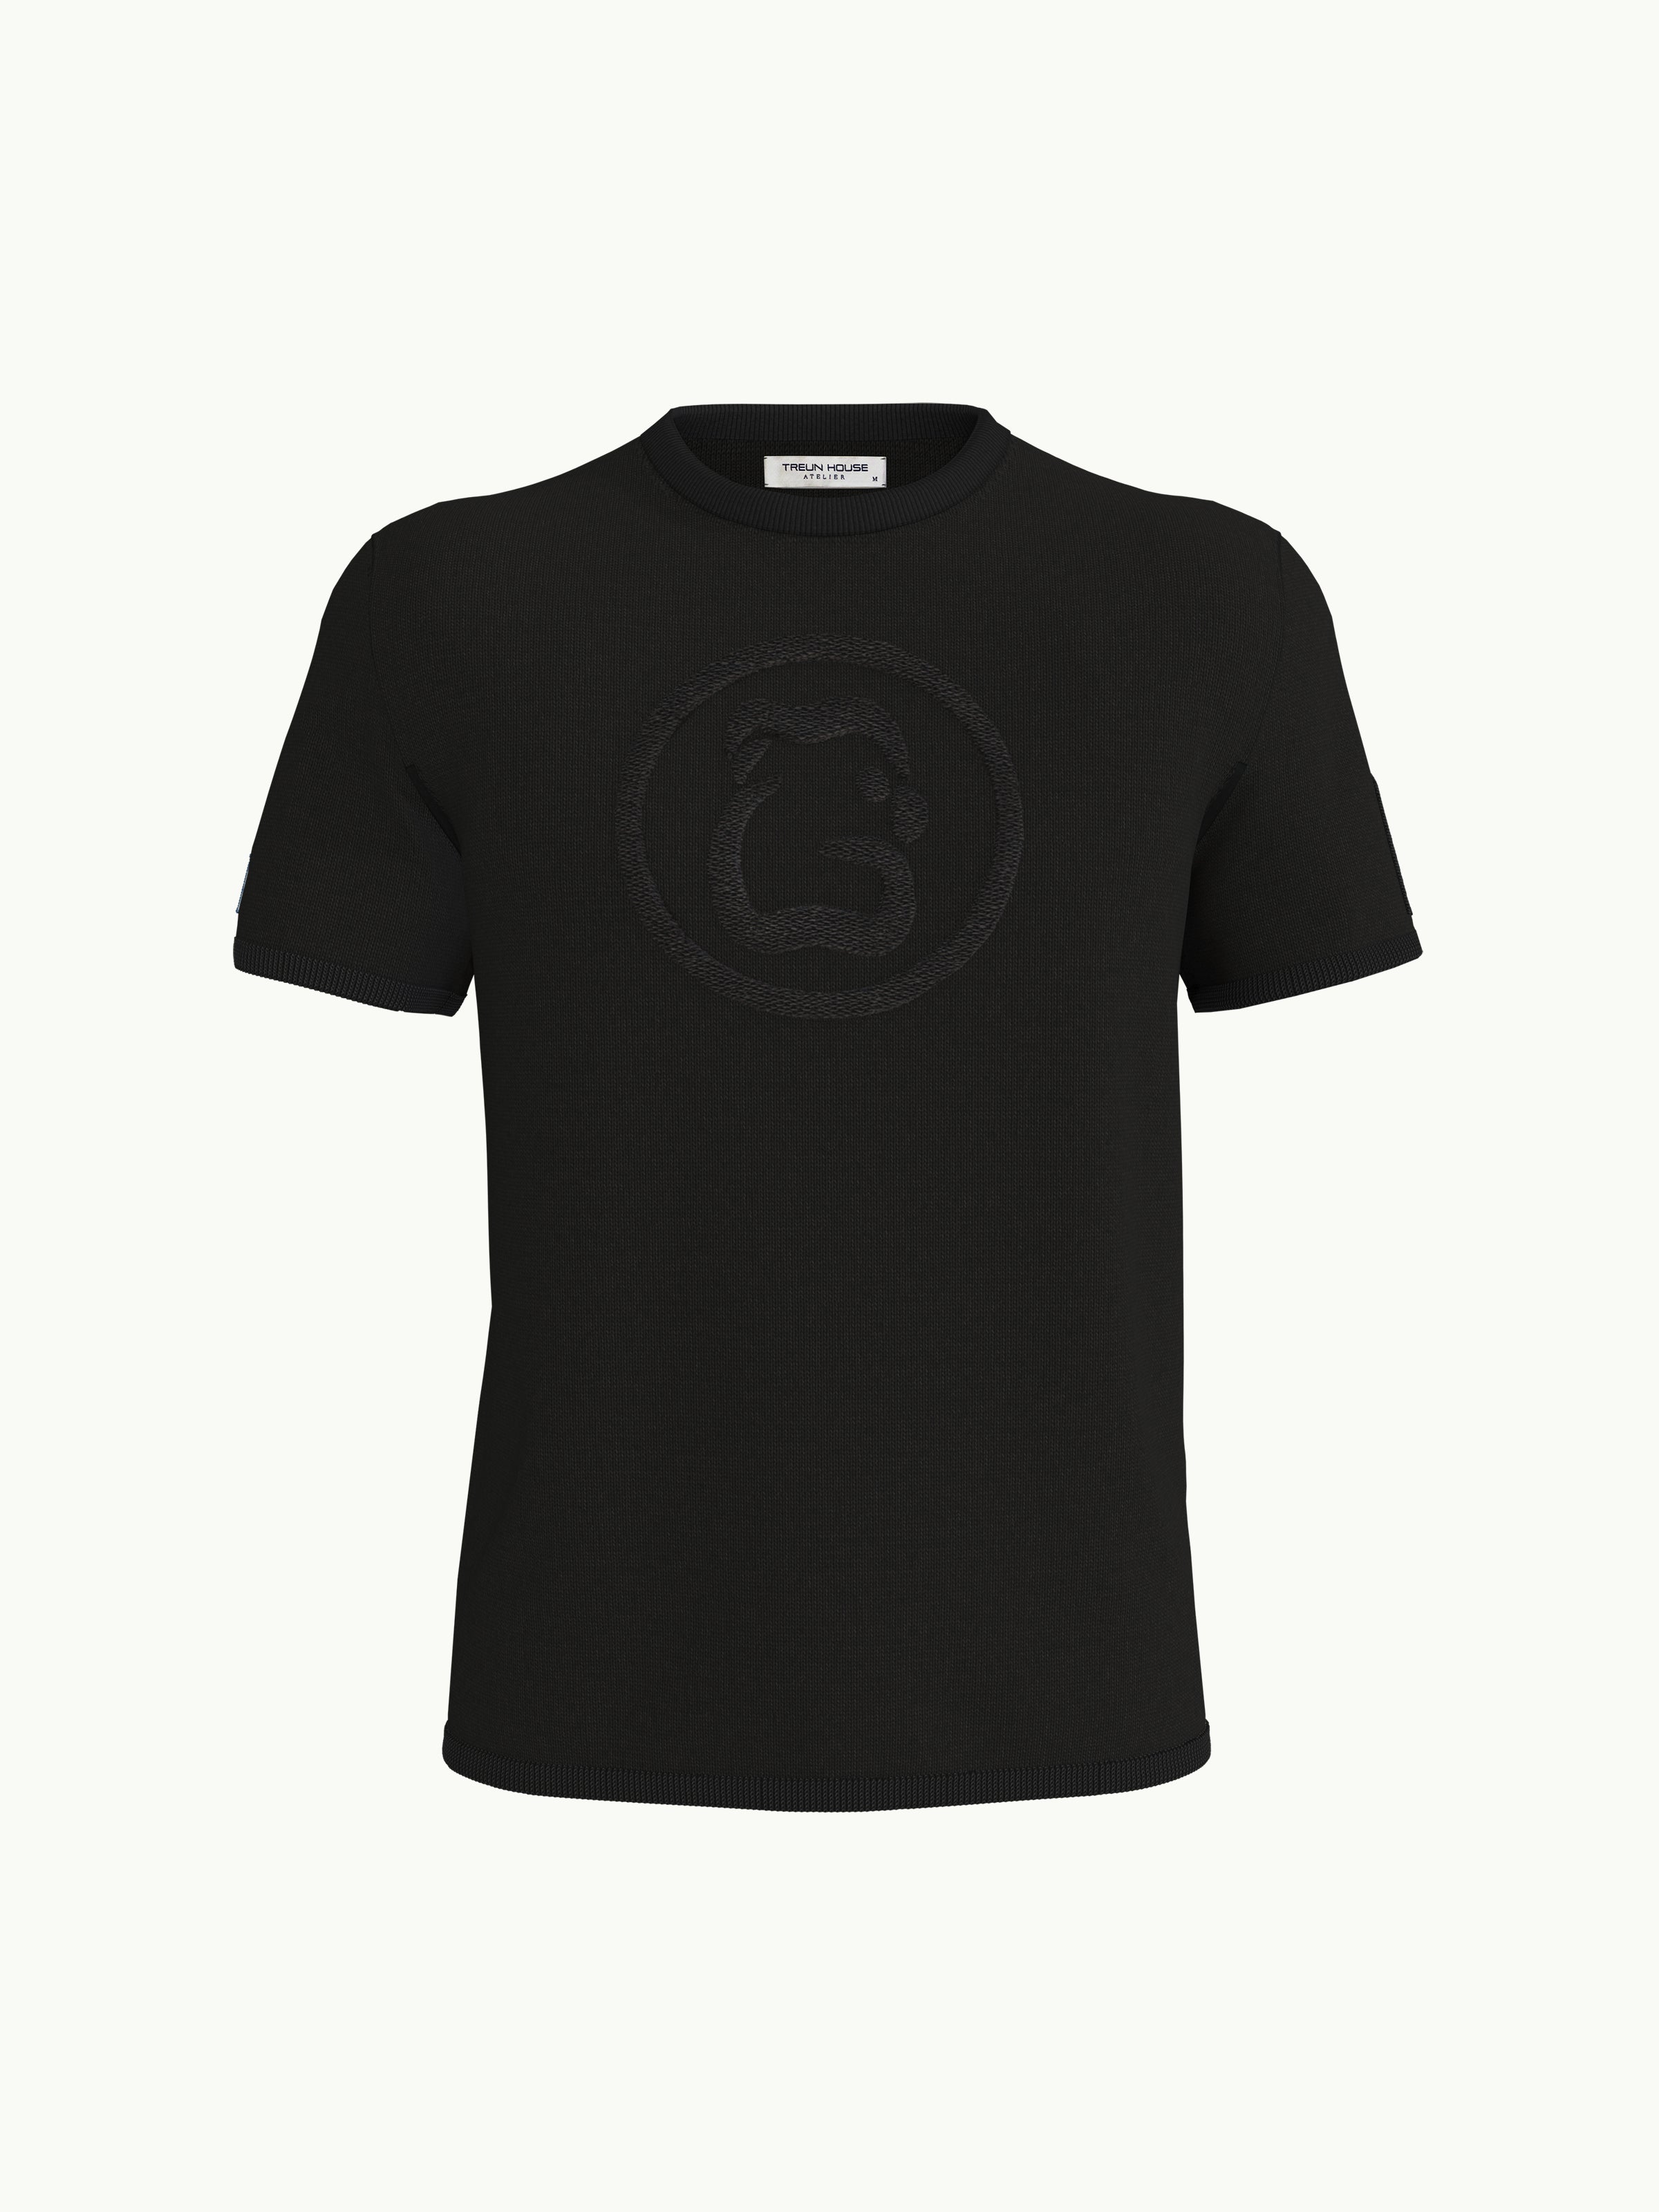 Women's T-Shirt - Glossy Cockatoo Black